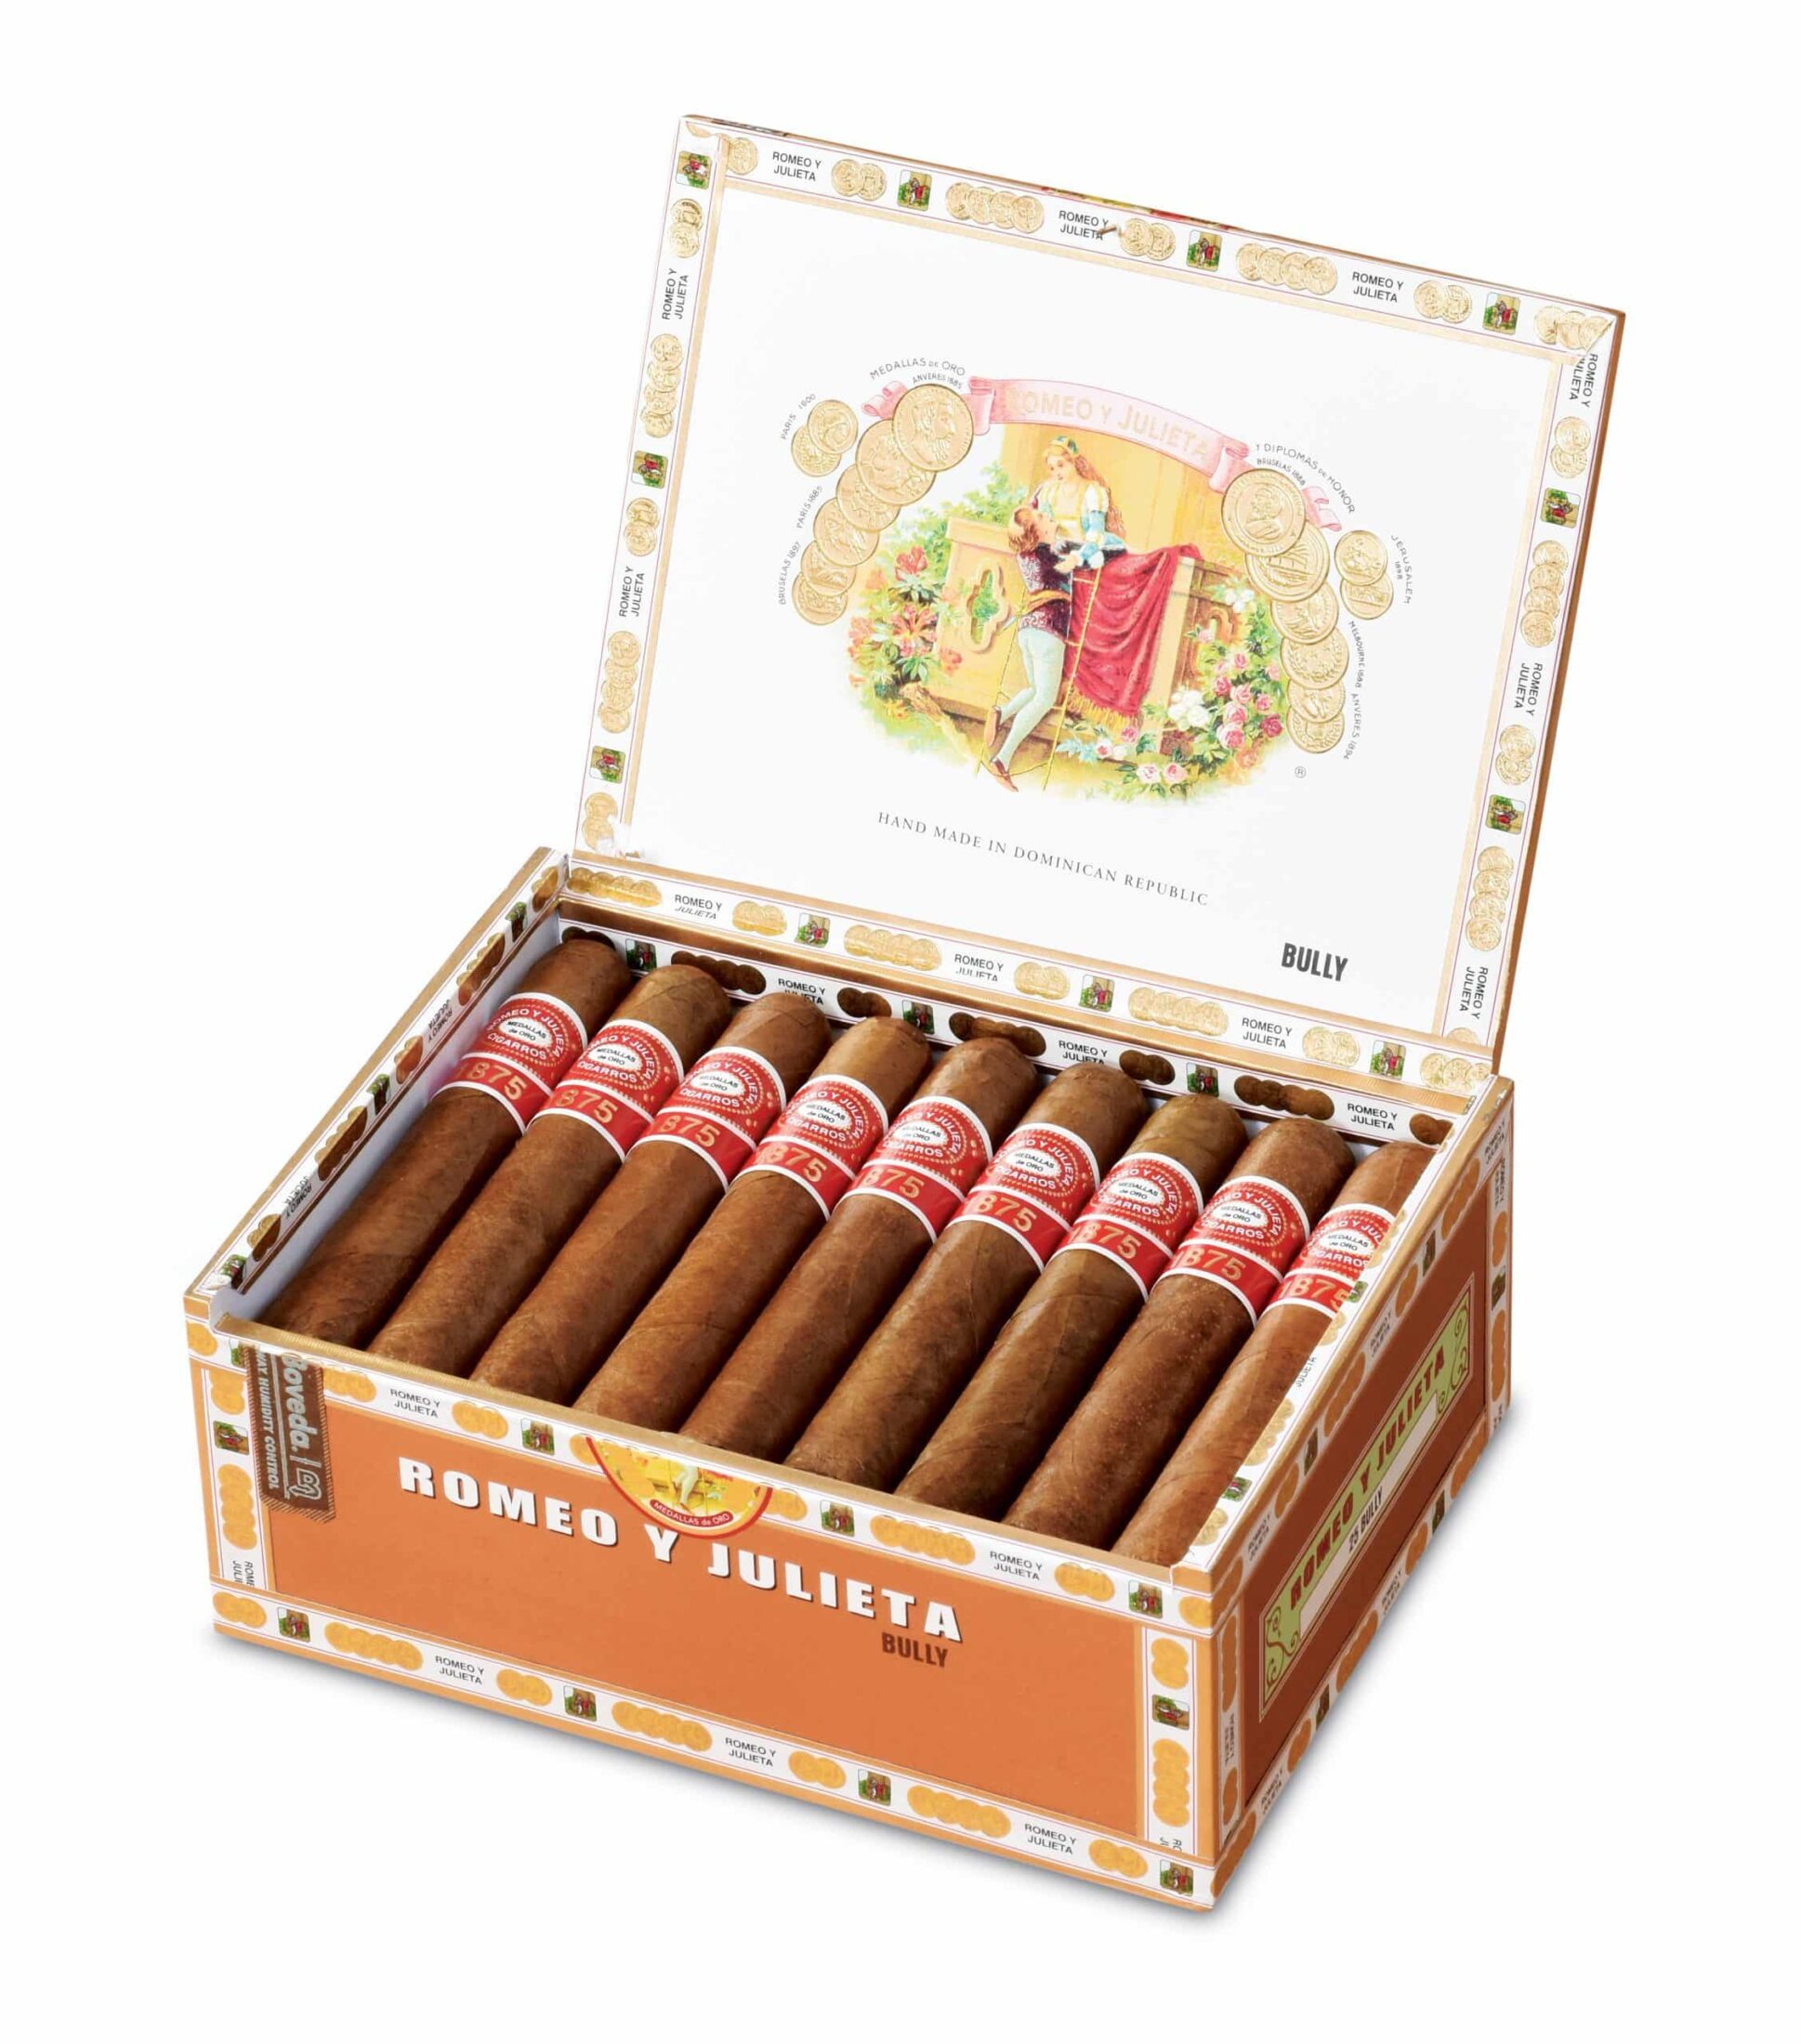 romeo y julieta bully cigar box open